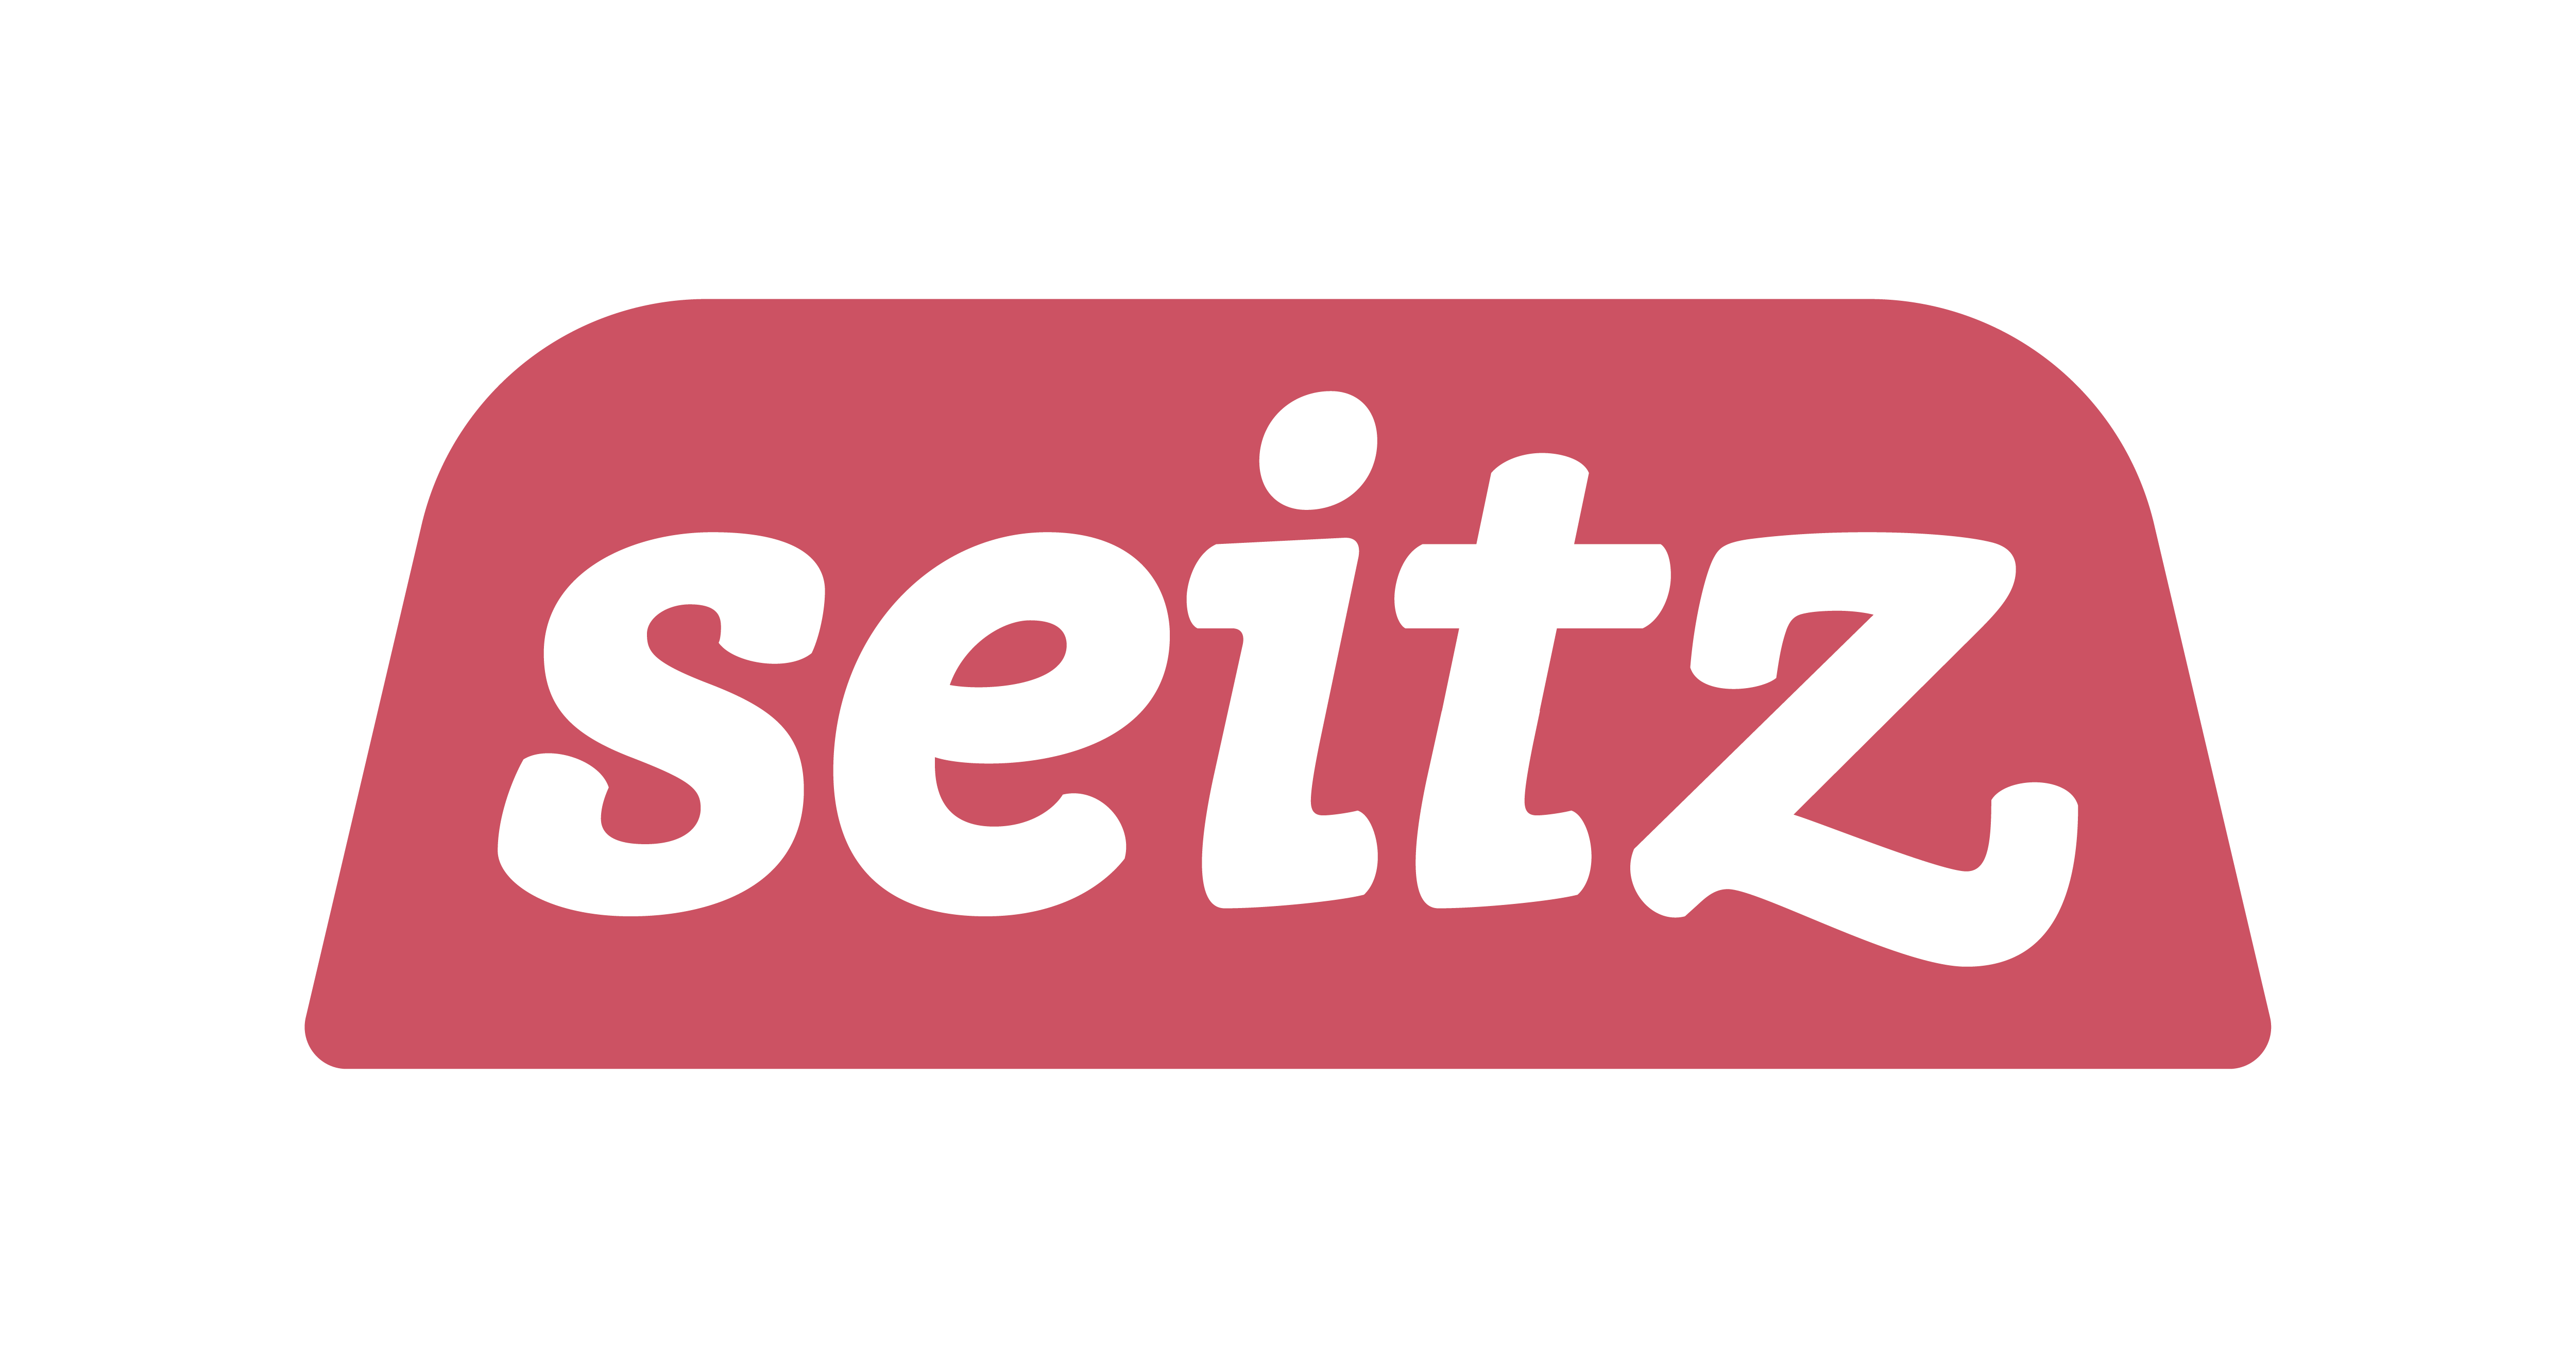 SEITZ_dachmarke_logo